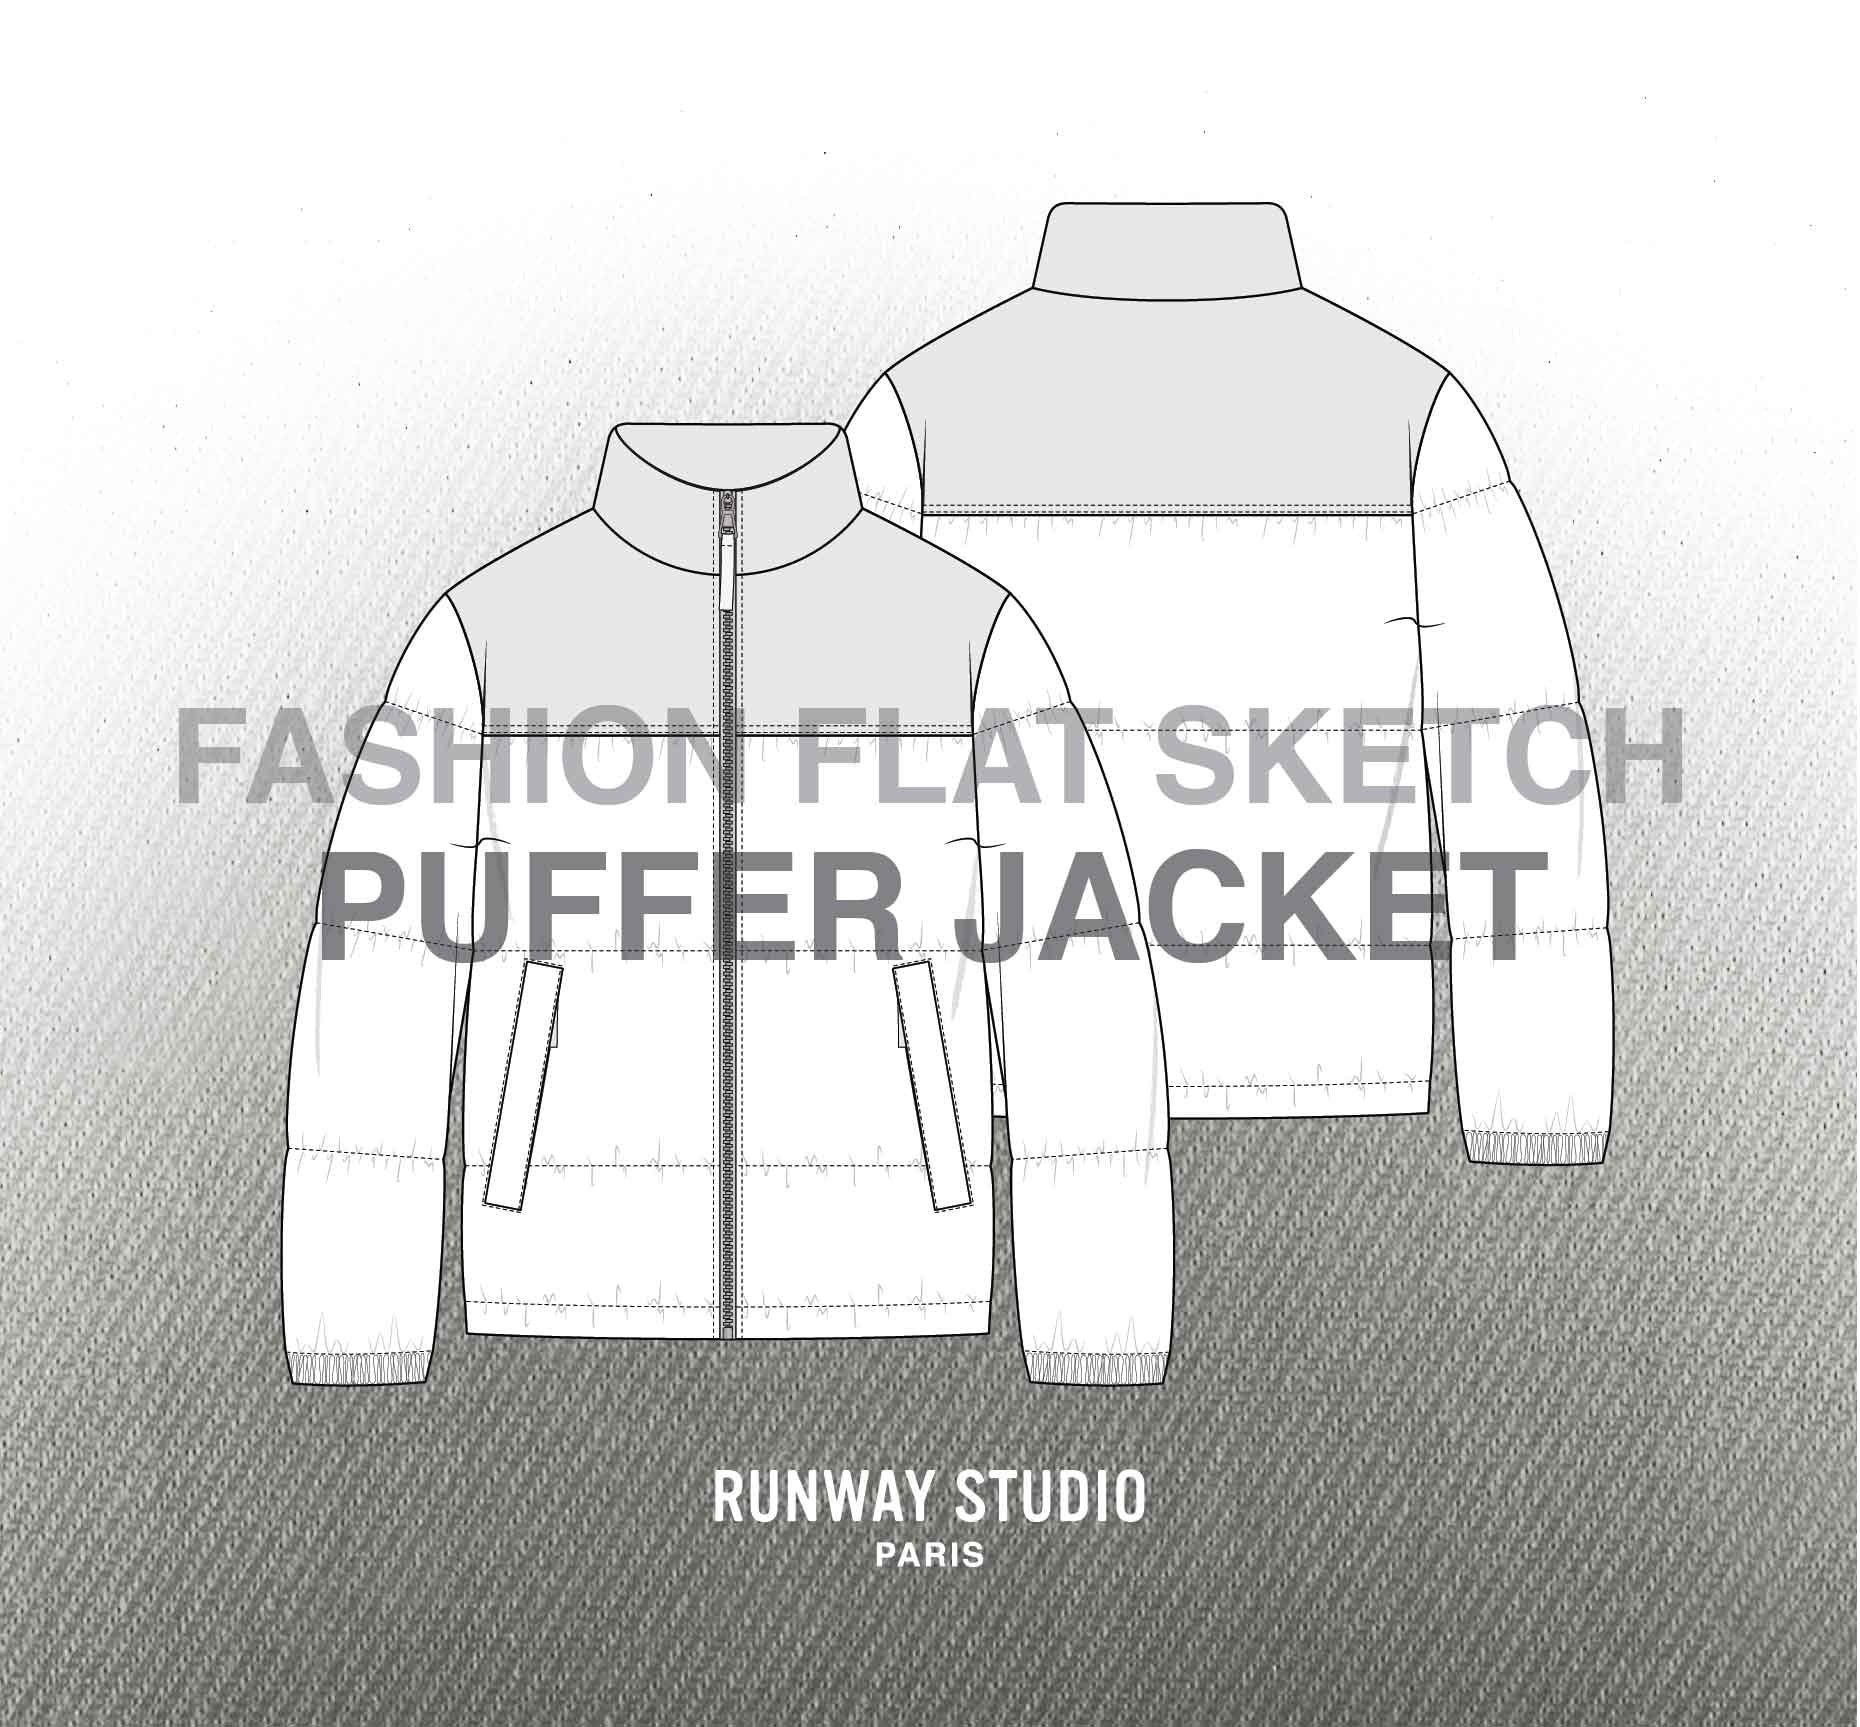 Puffy jacket [oc] : r/sketches